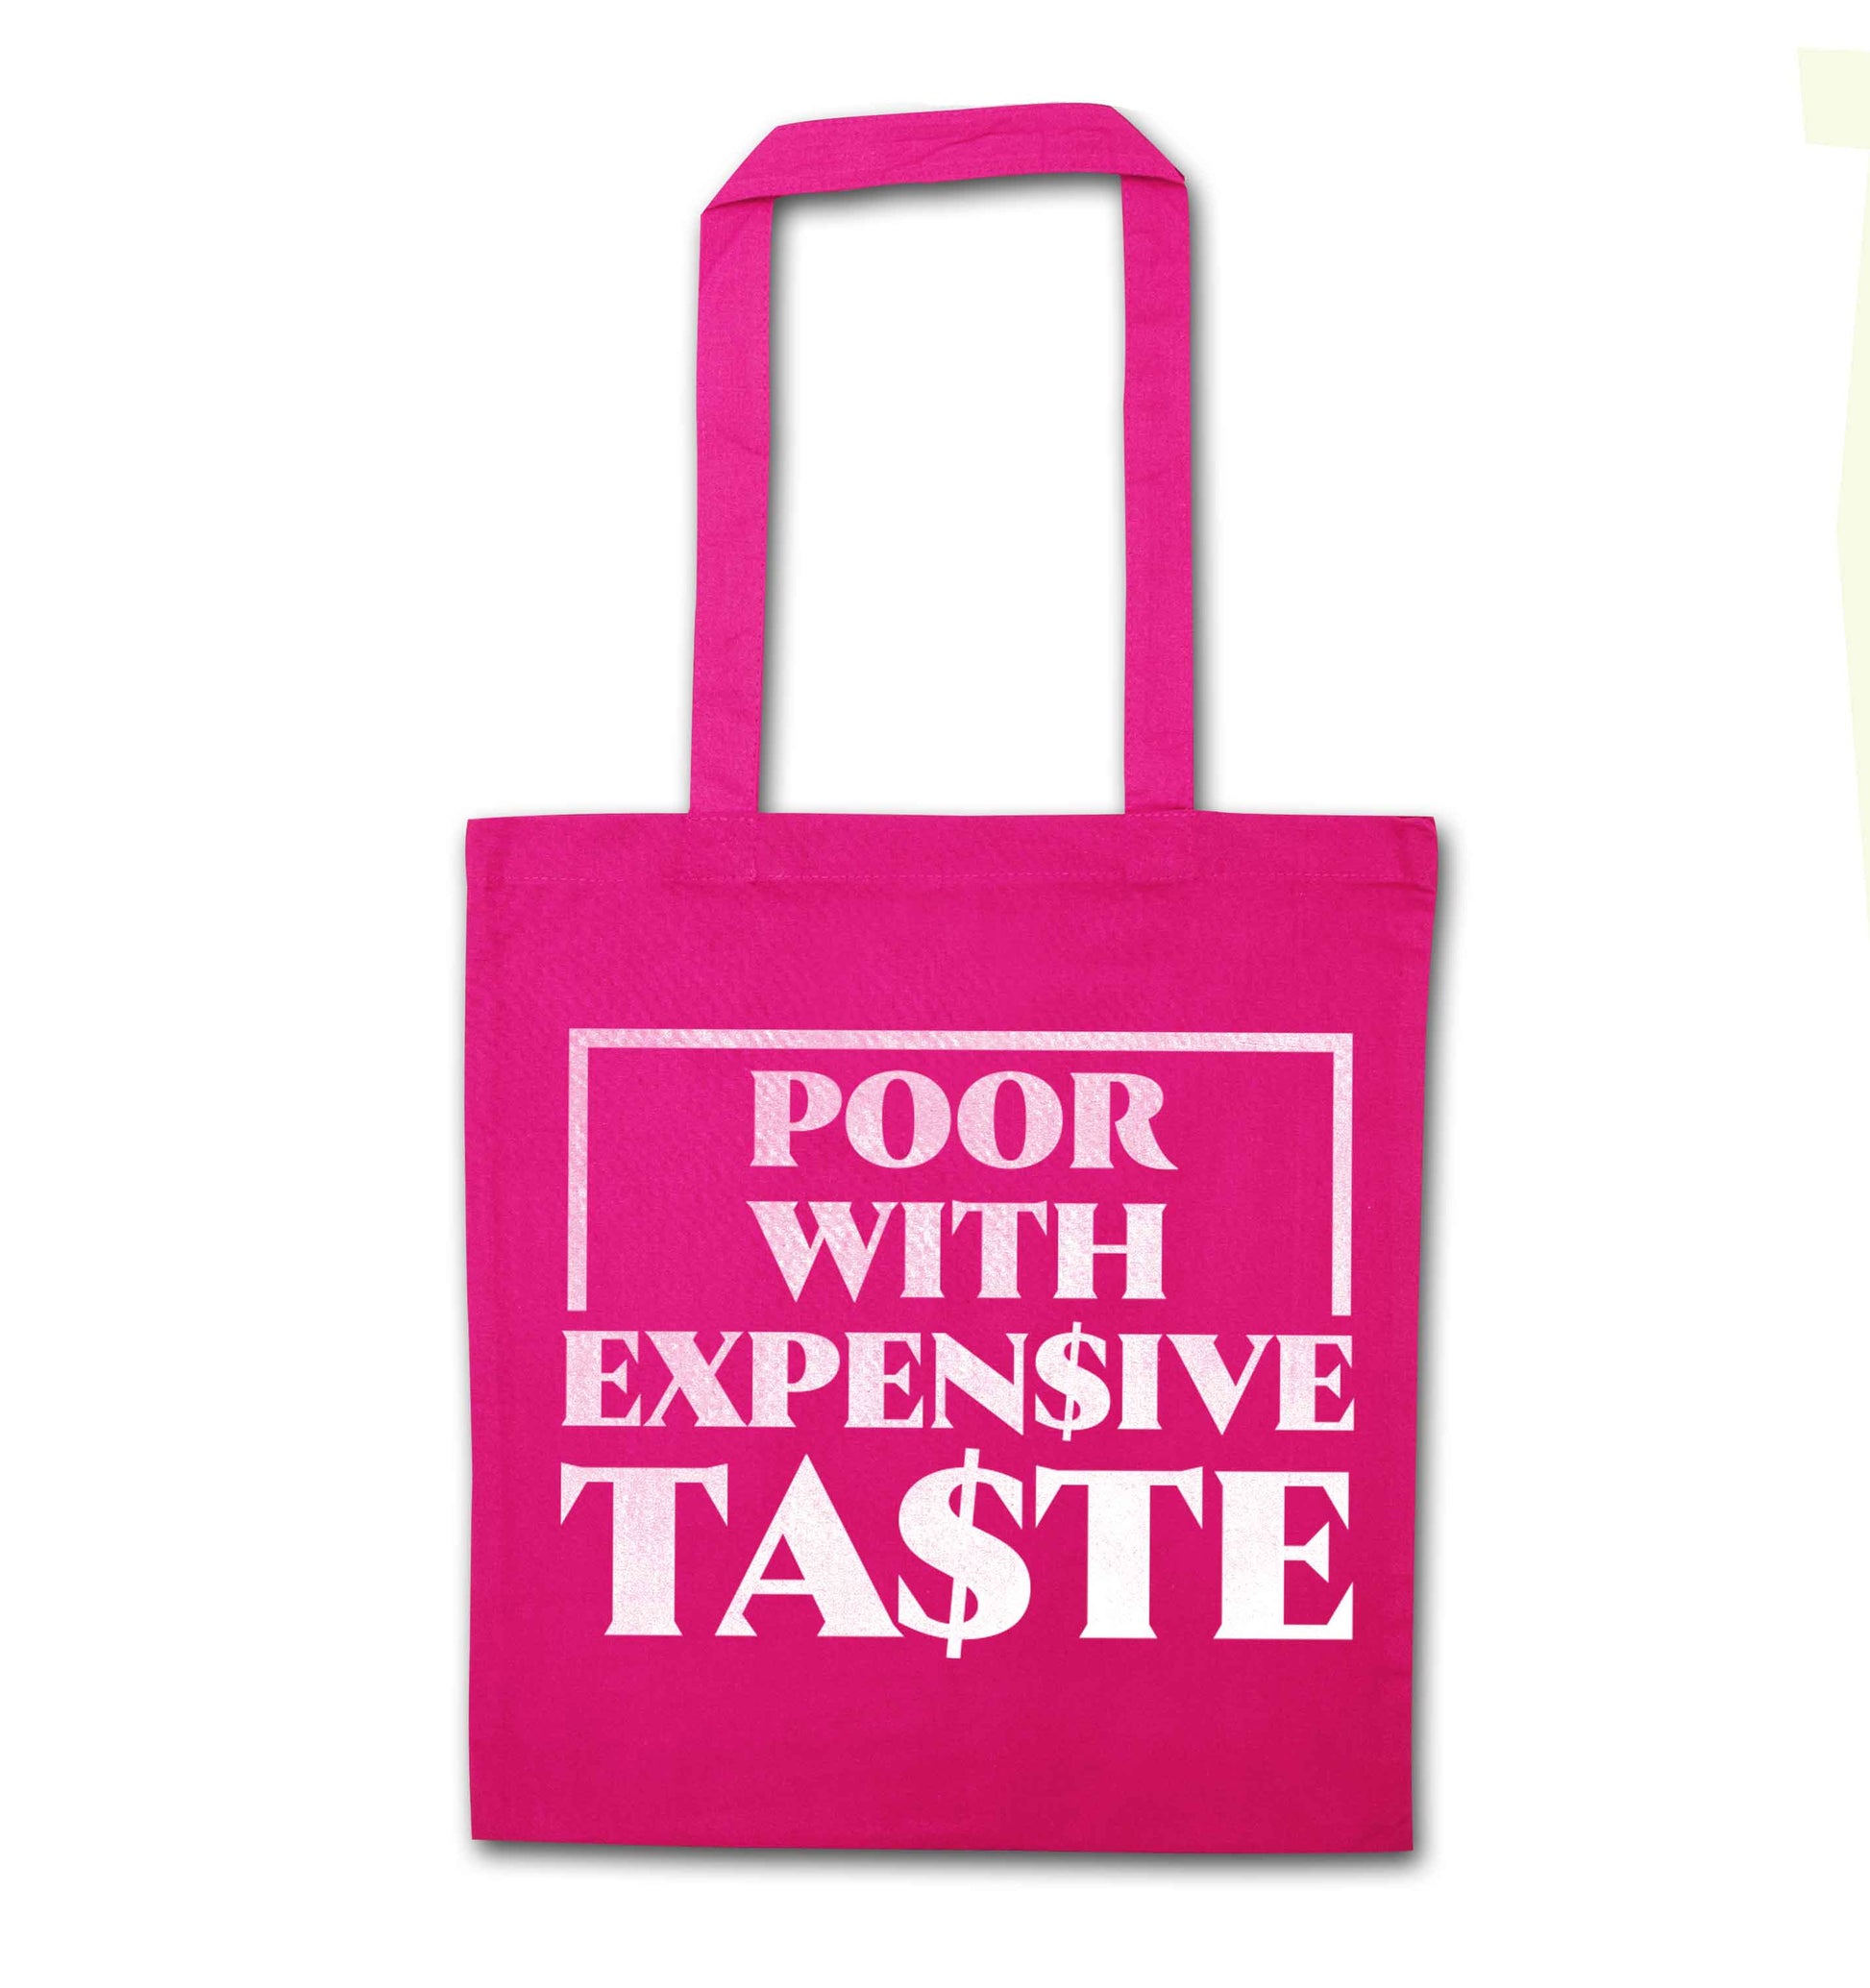 Poor with expensive taste pink tote bag